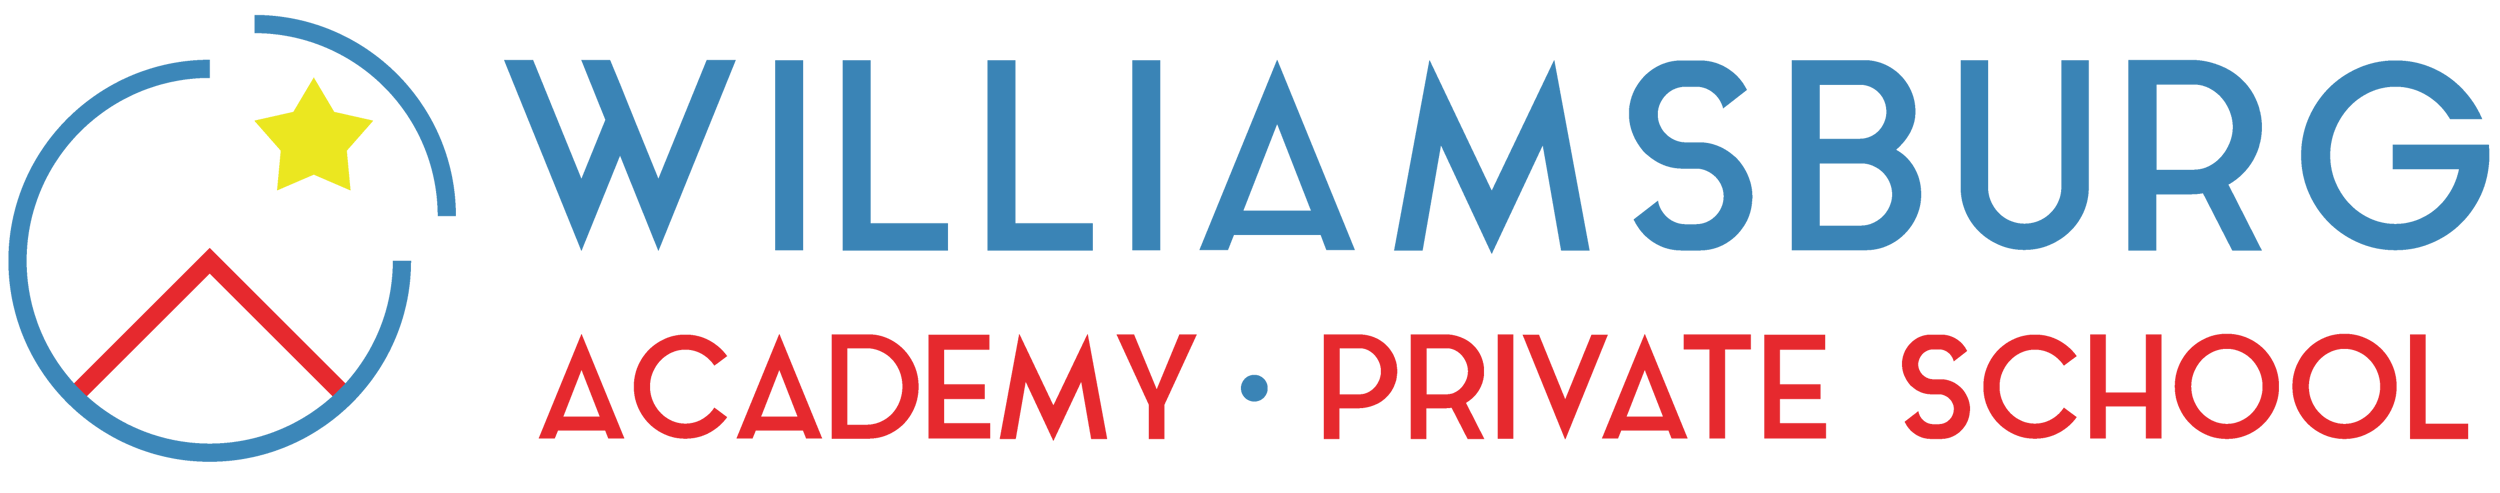 Williamsburg-Academy-Private-School-logo